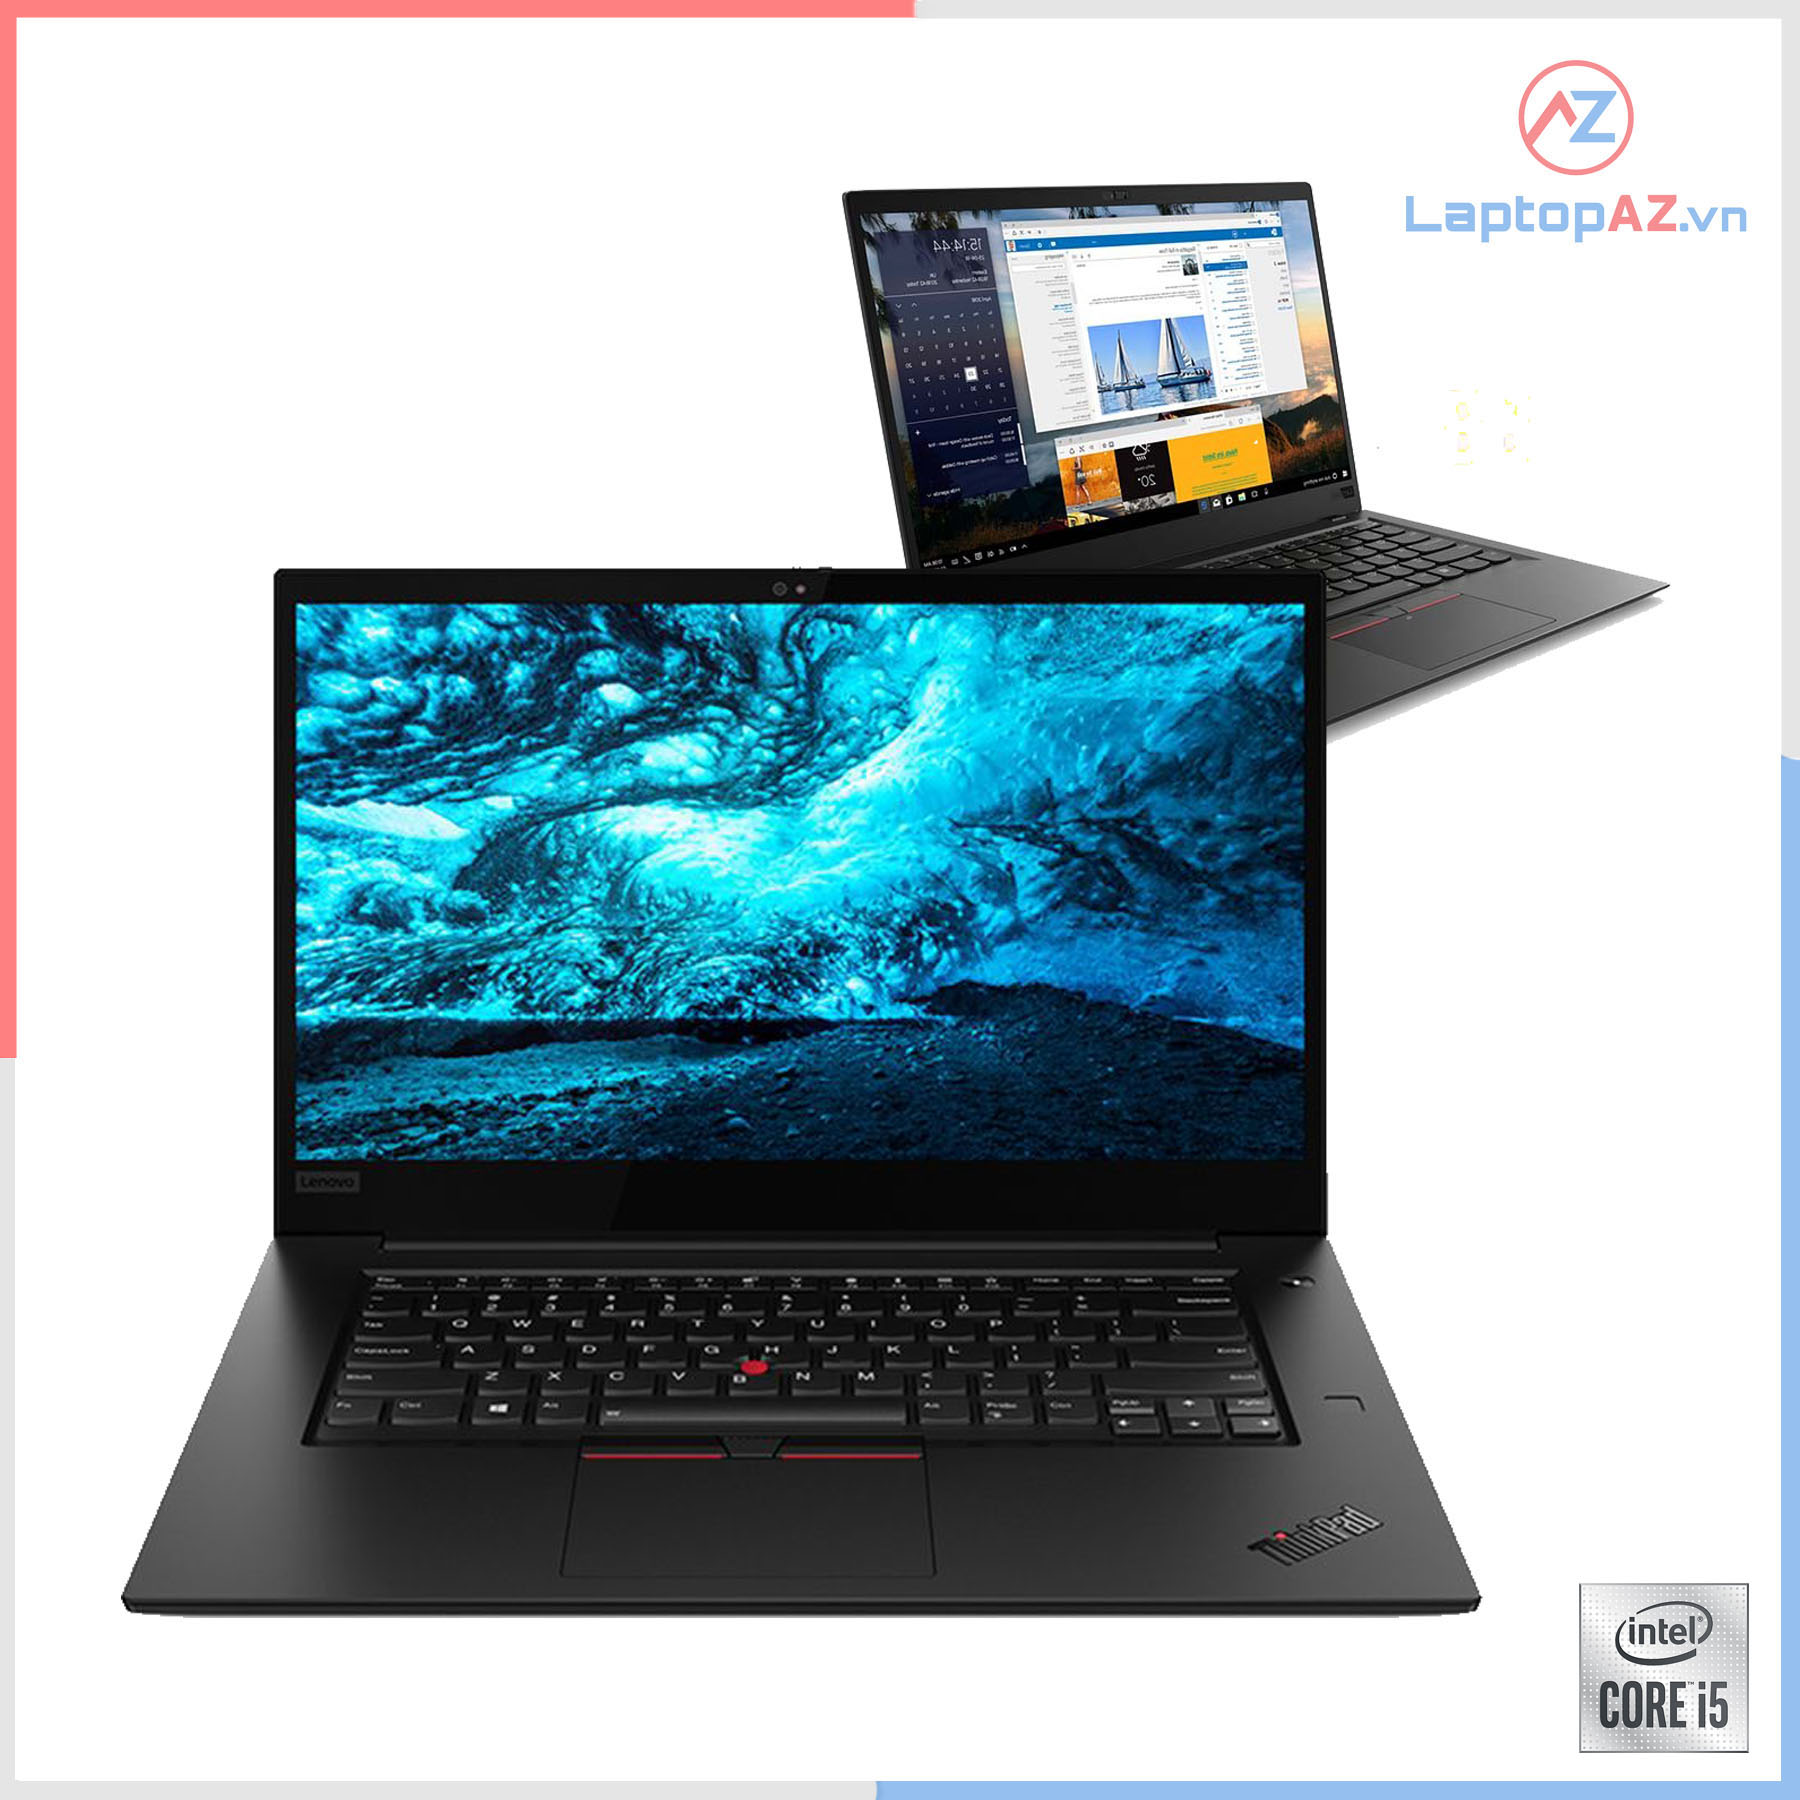 Laptop Lenovo Thinkpad X1 Carbon Gen 4 (Core i5-6200U, 8GB, 256GB, VGA intel HD Graphics 520, 14 inch FHD)